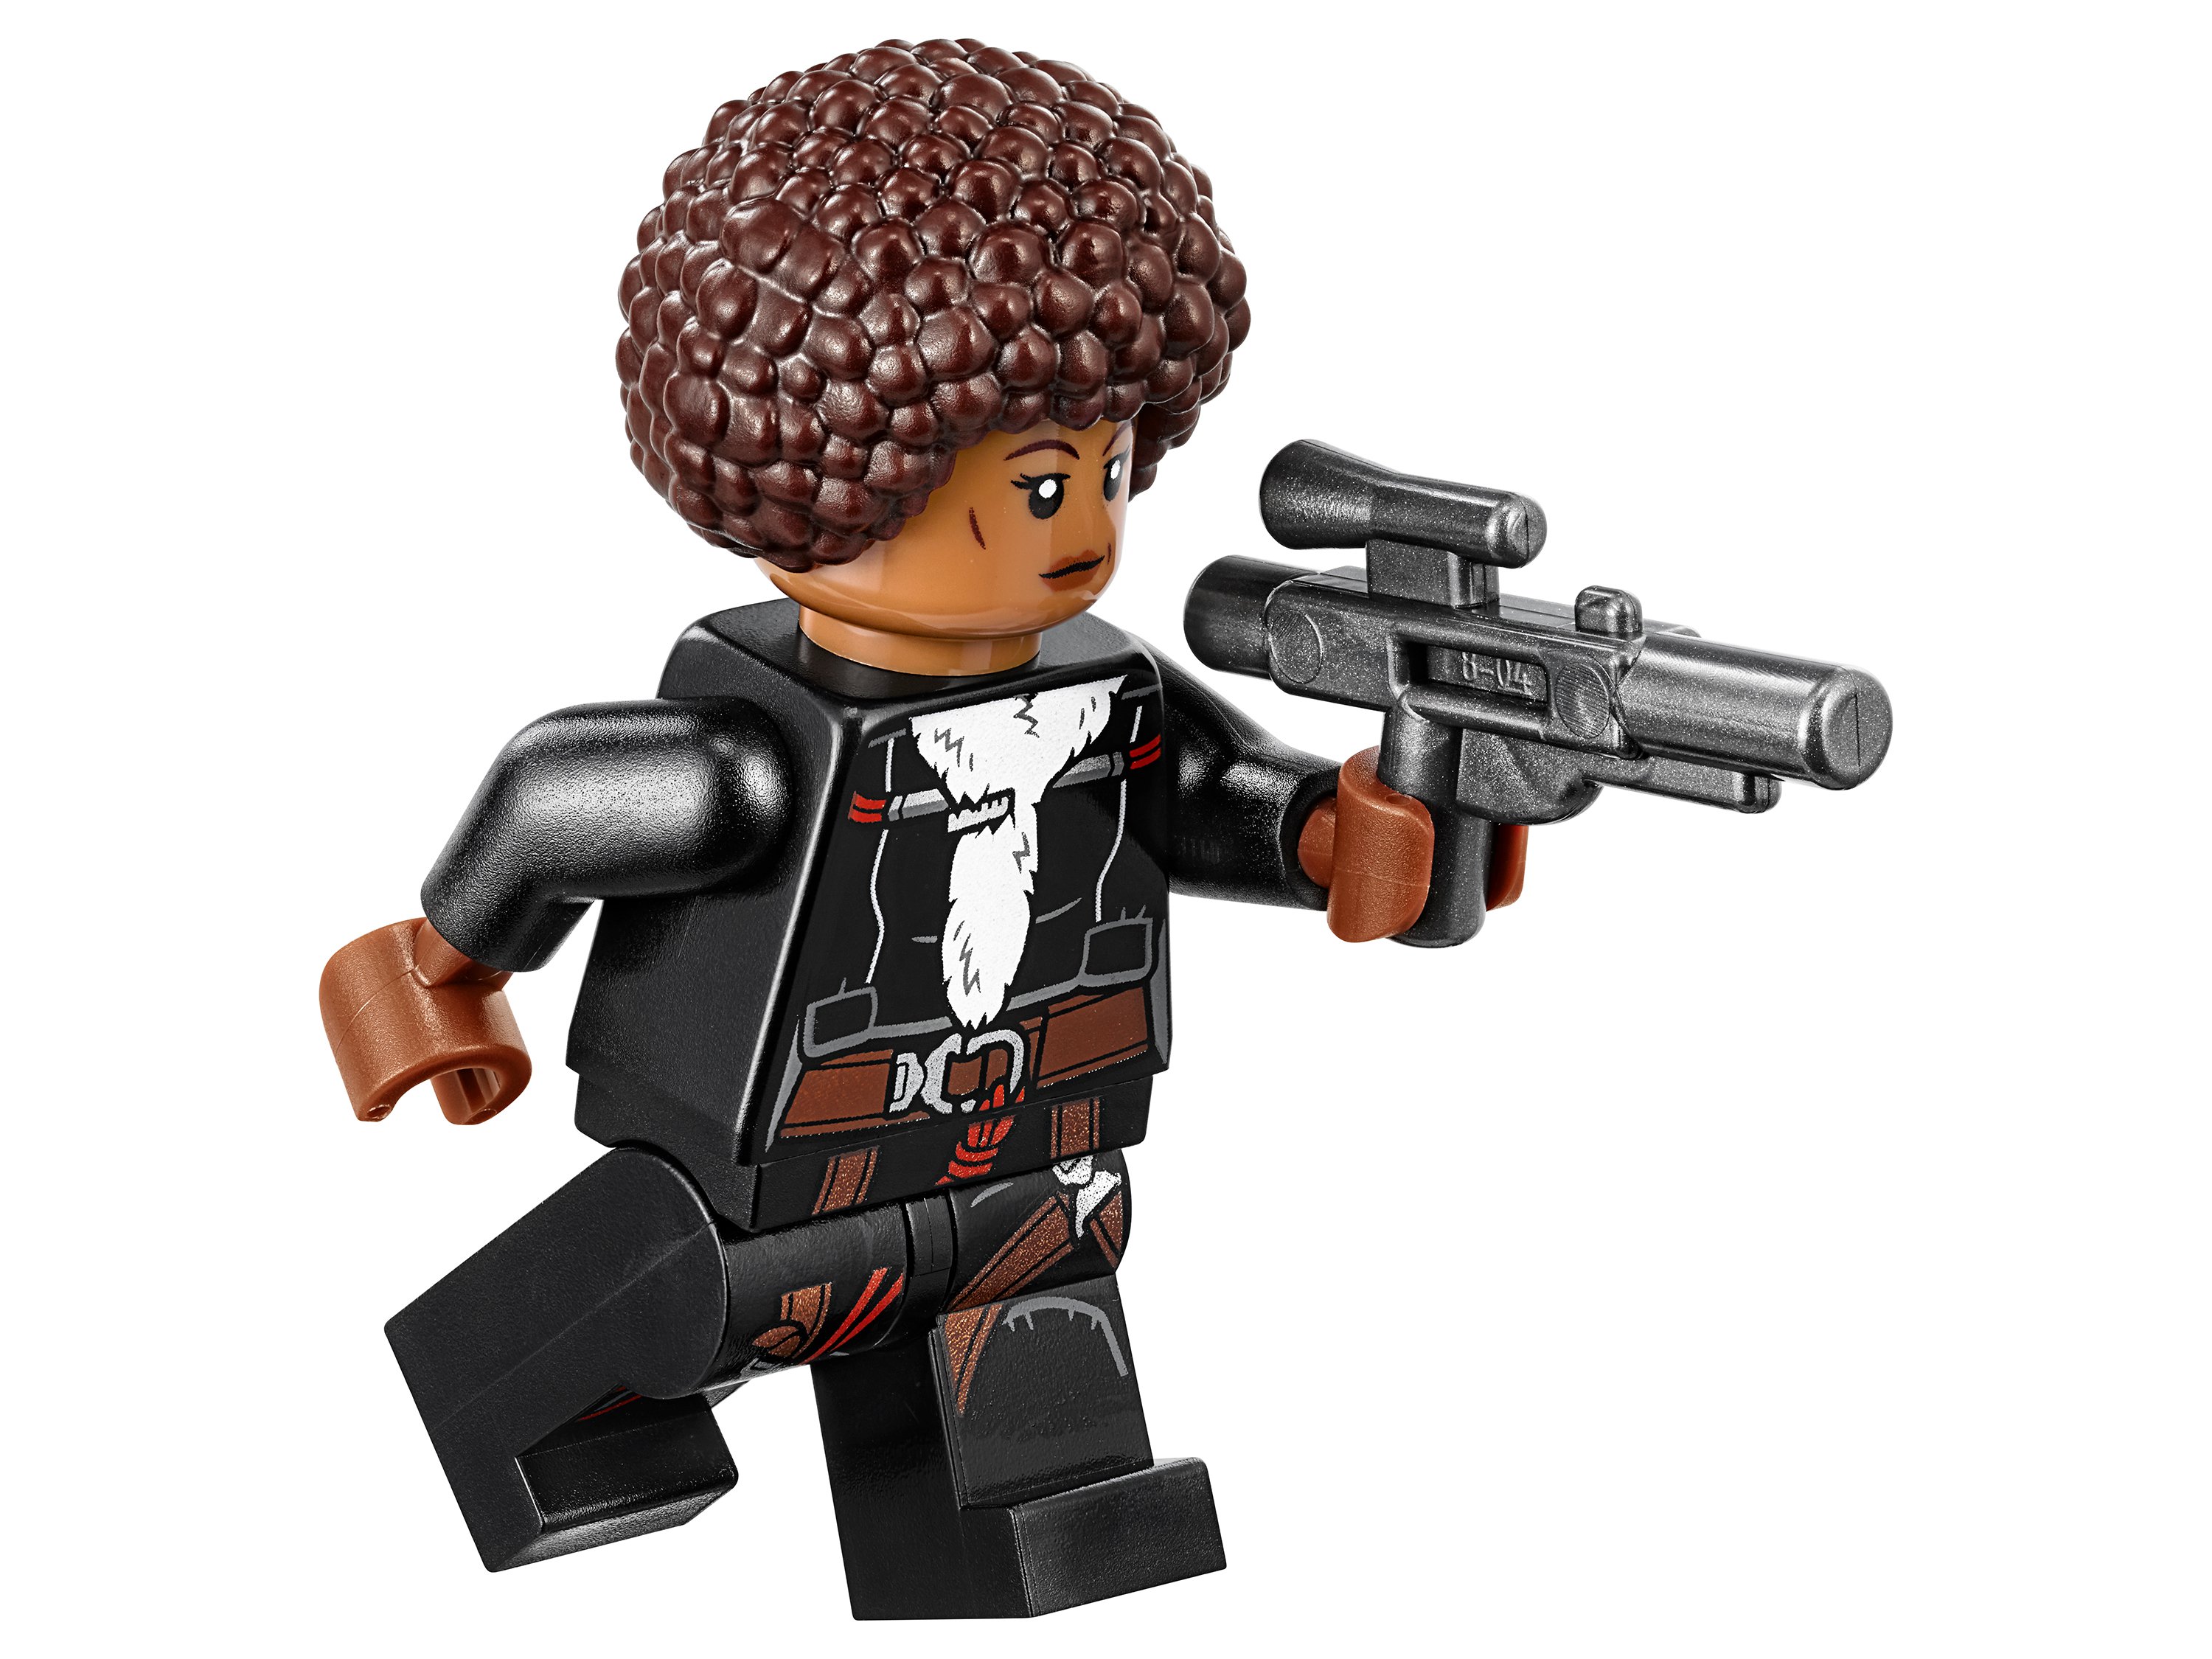 Lego Star Wars 75219 Имперский шагоход-тягач